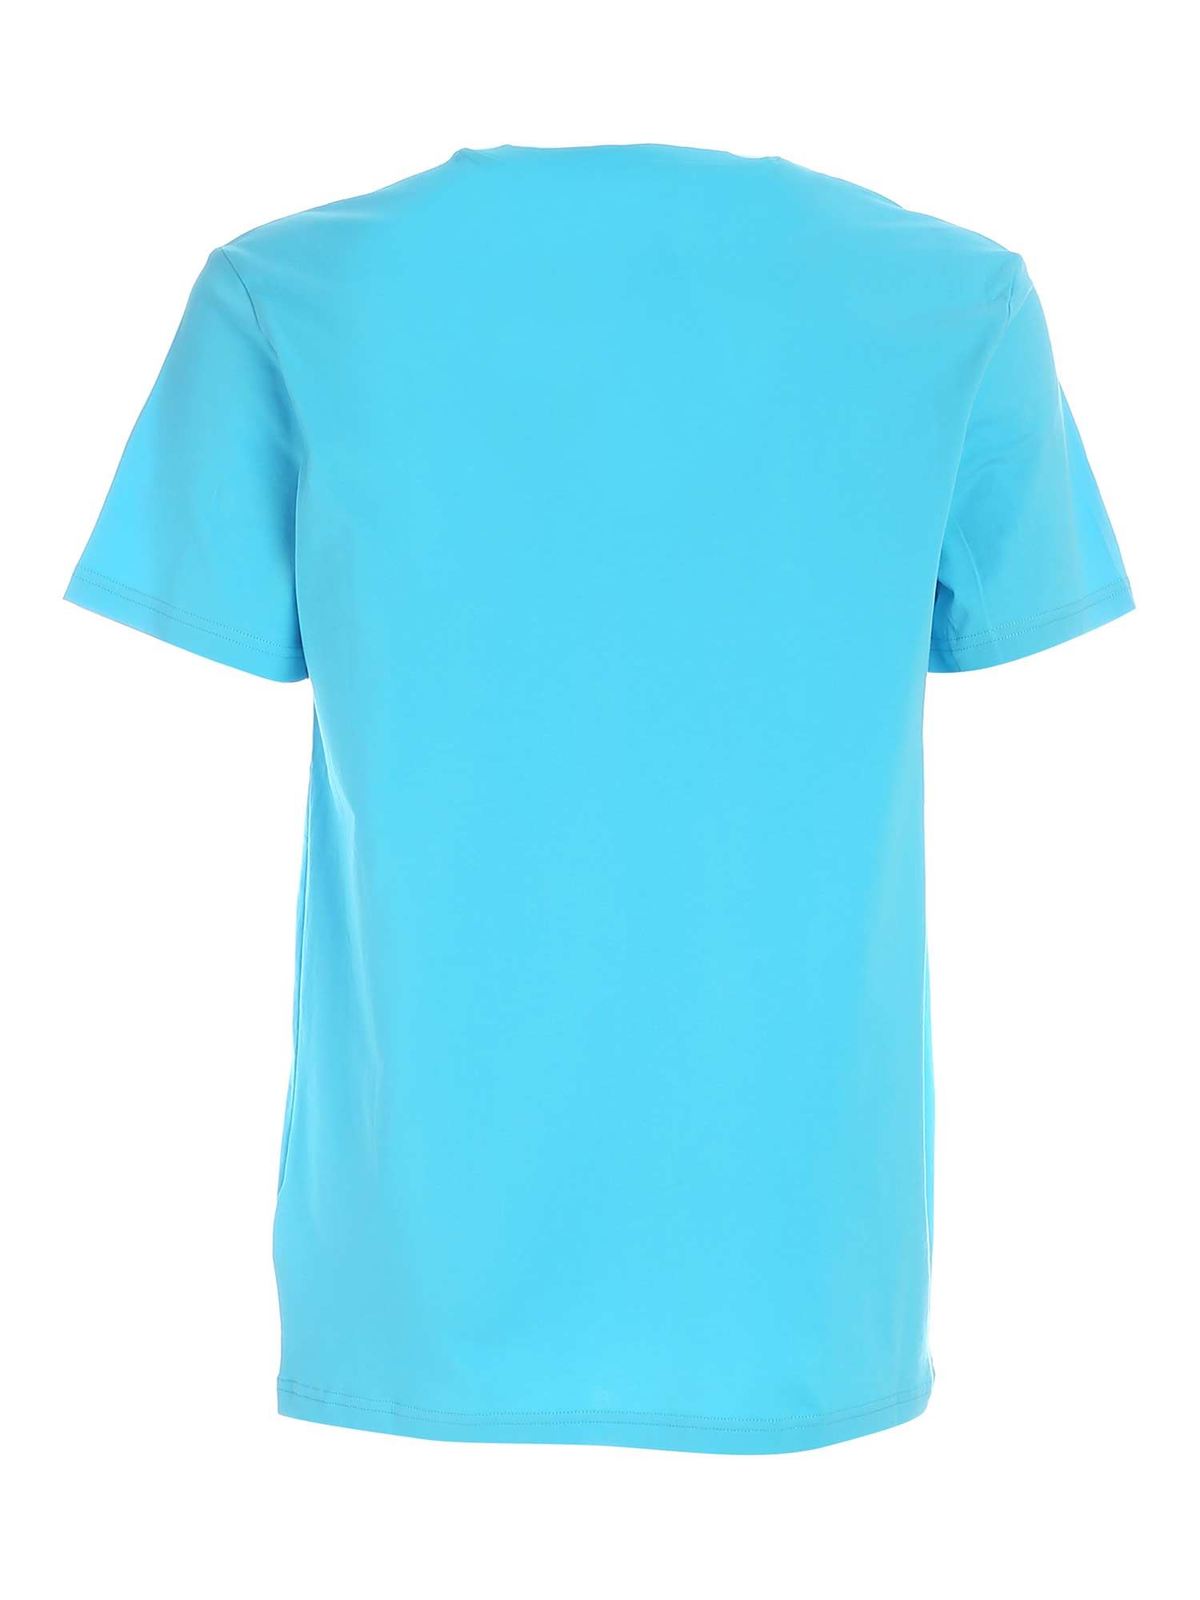 blue moschino t shirt